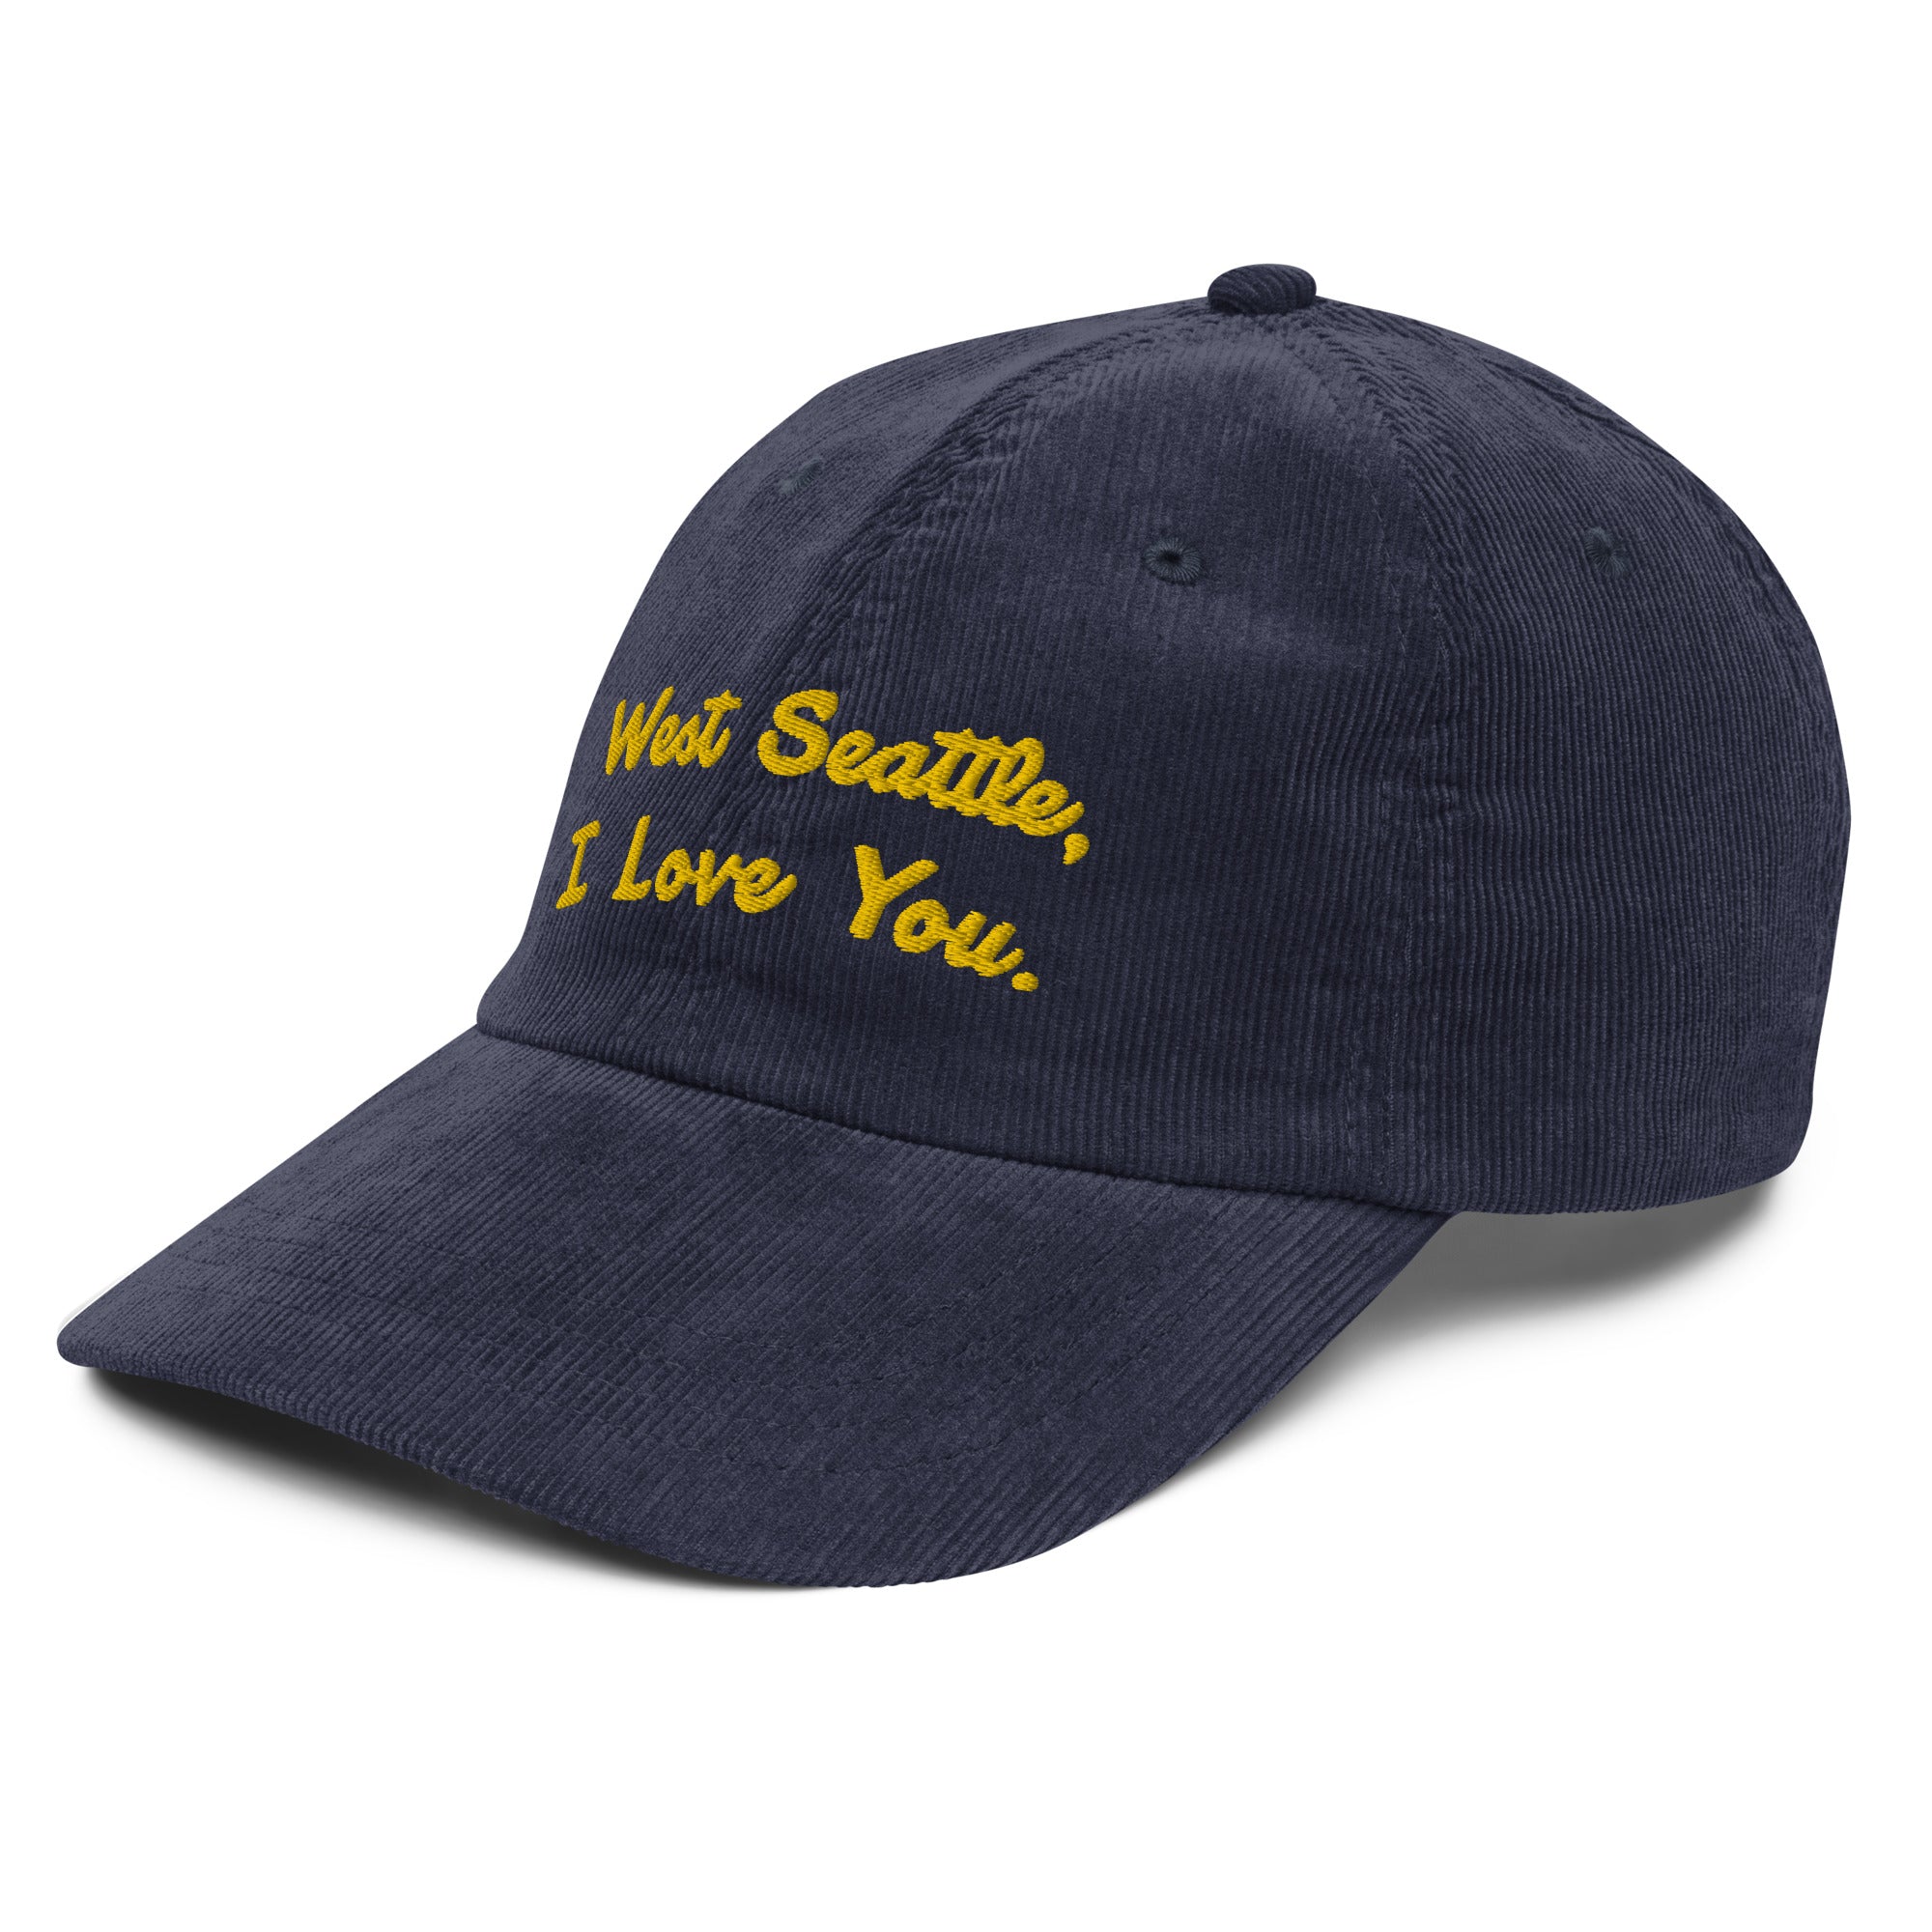 I Love You Corduroy Hat - West Seattle | Seattle, WA